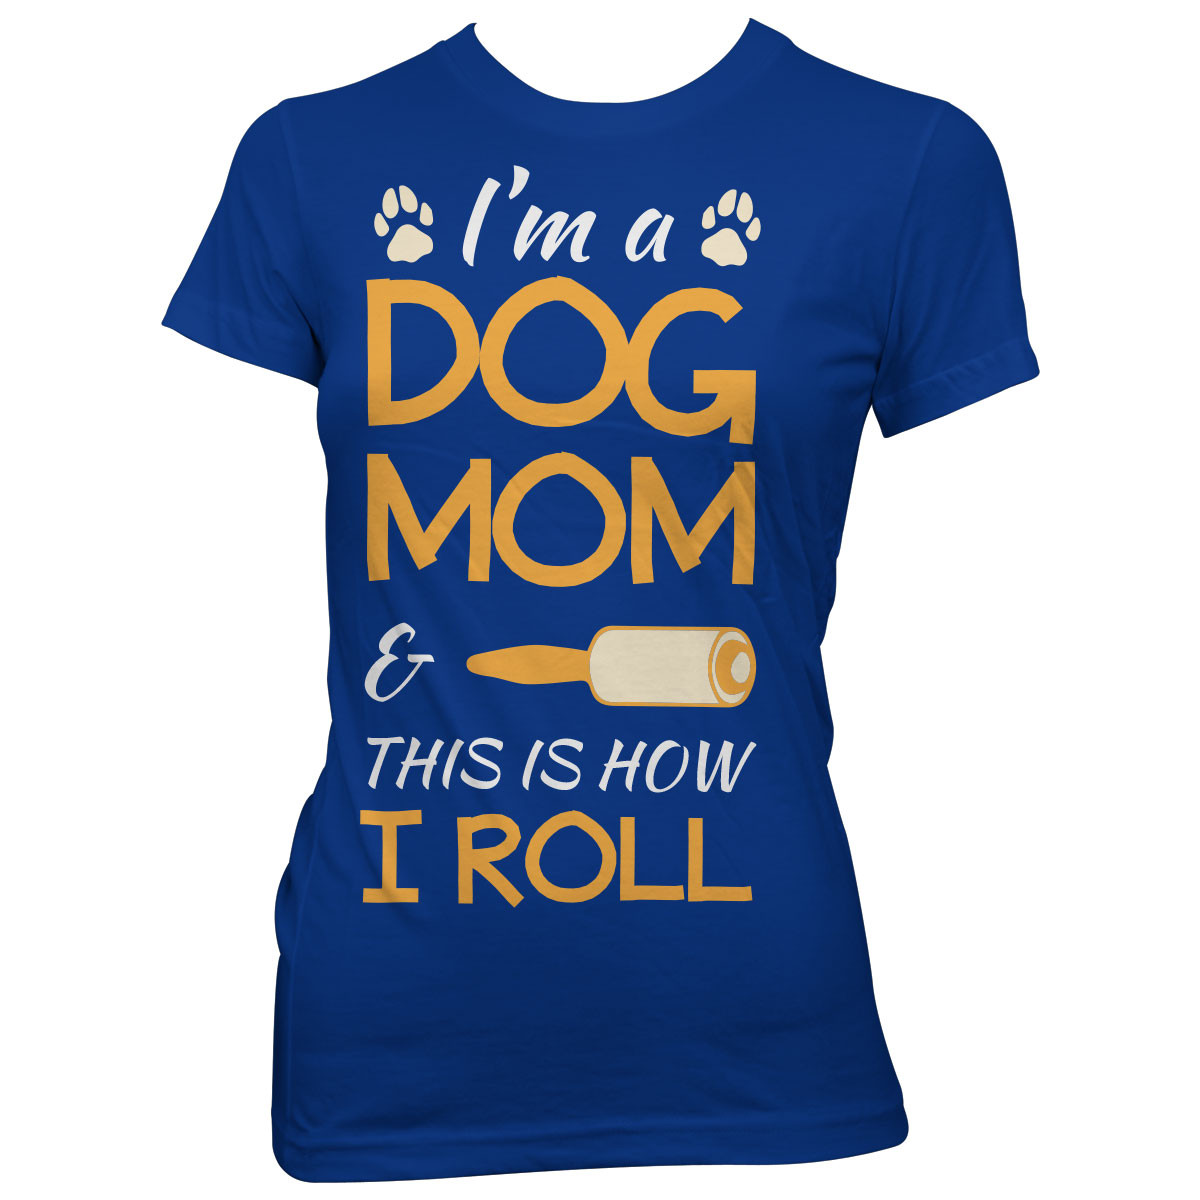 "I'm A Dog Mom" T-Shirt